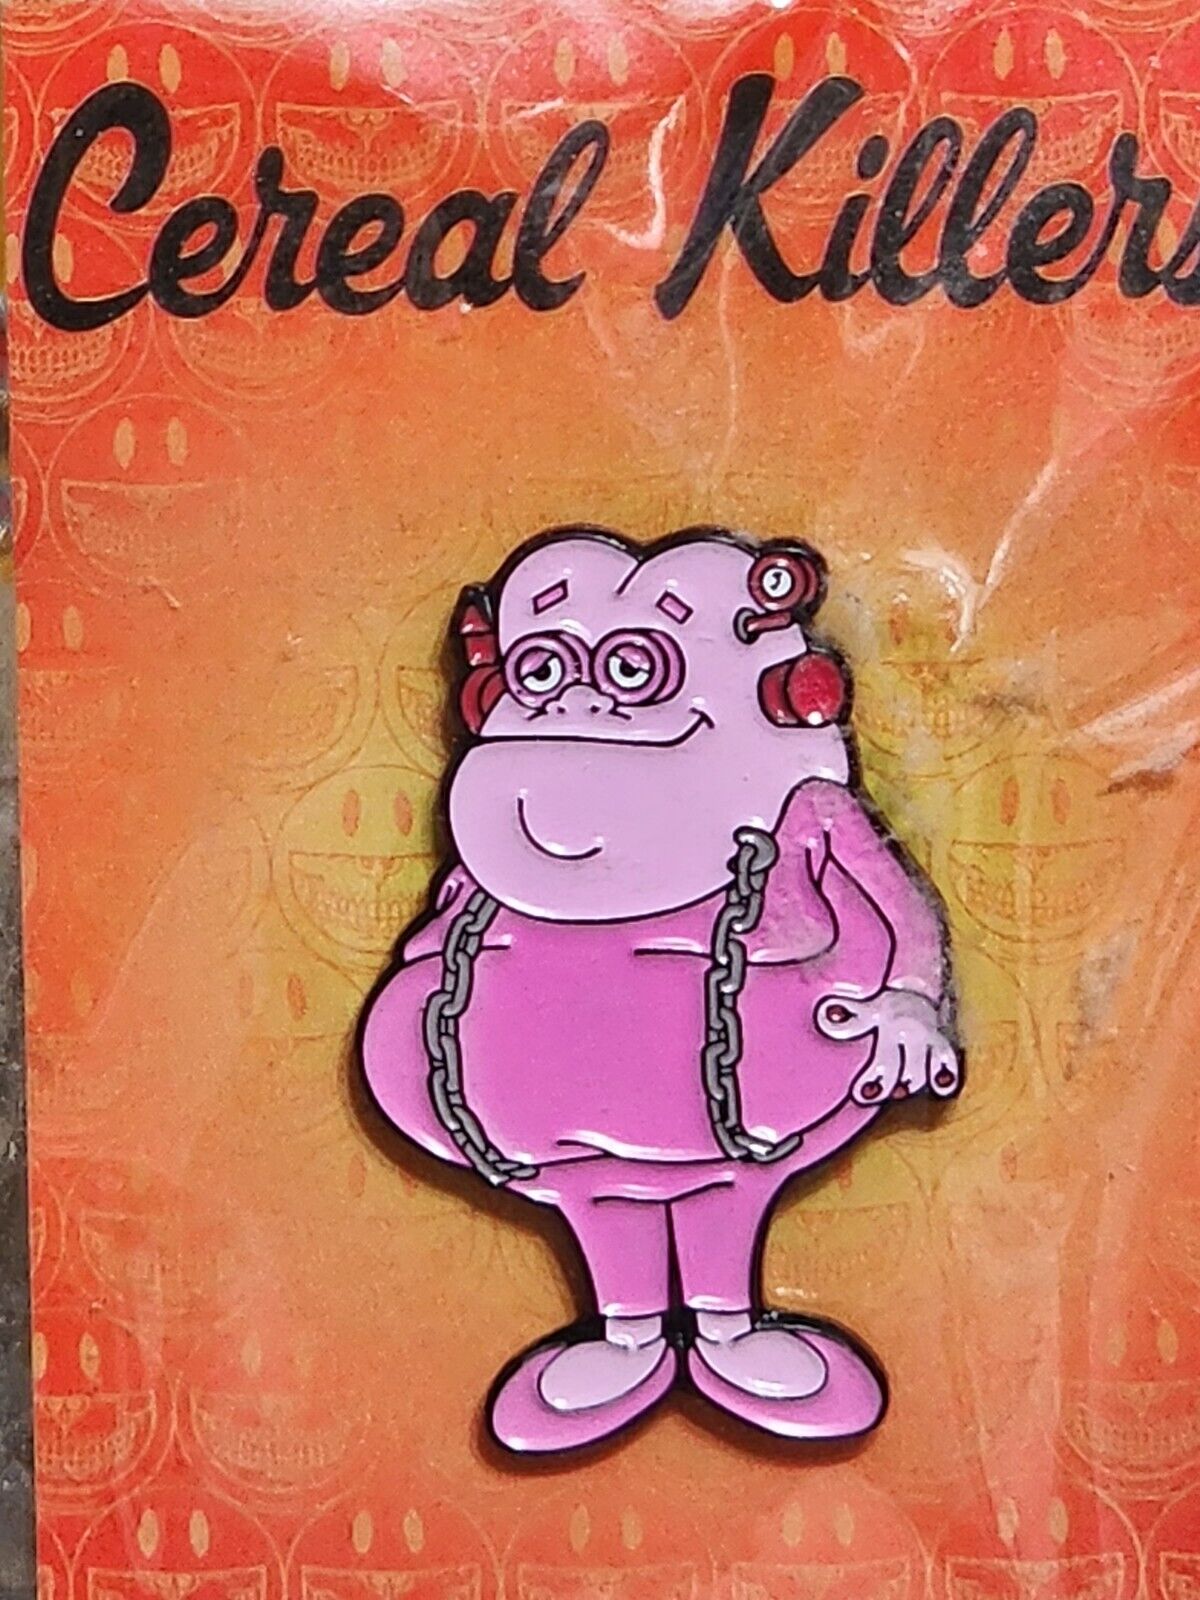 Popaganda by Ron English Cereal Killers Franken Fat Pin Collectible Art